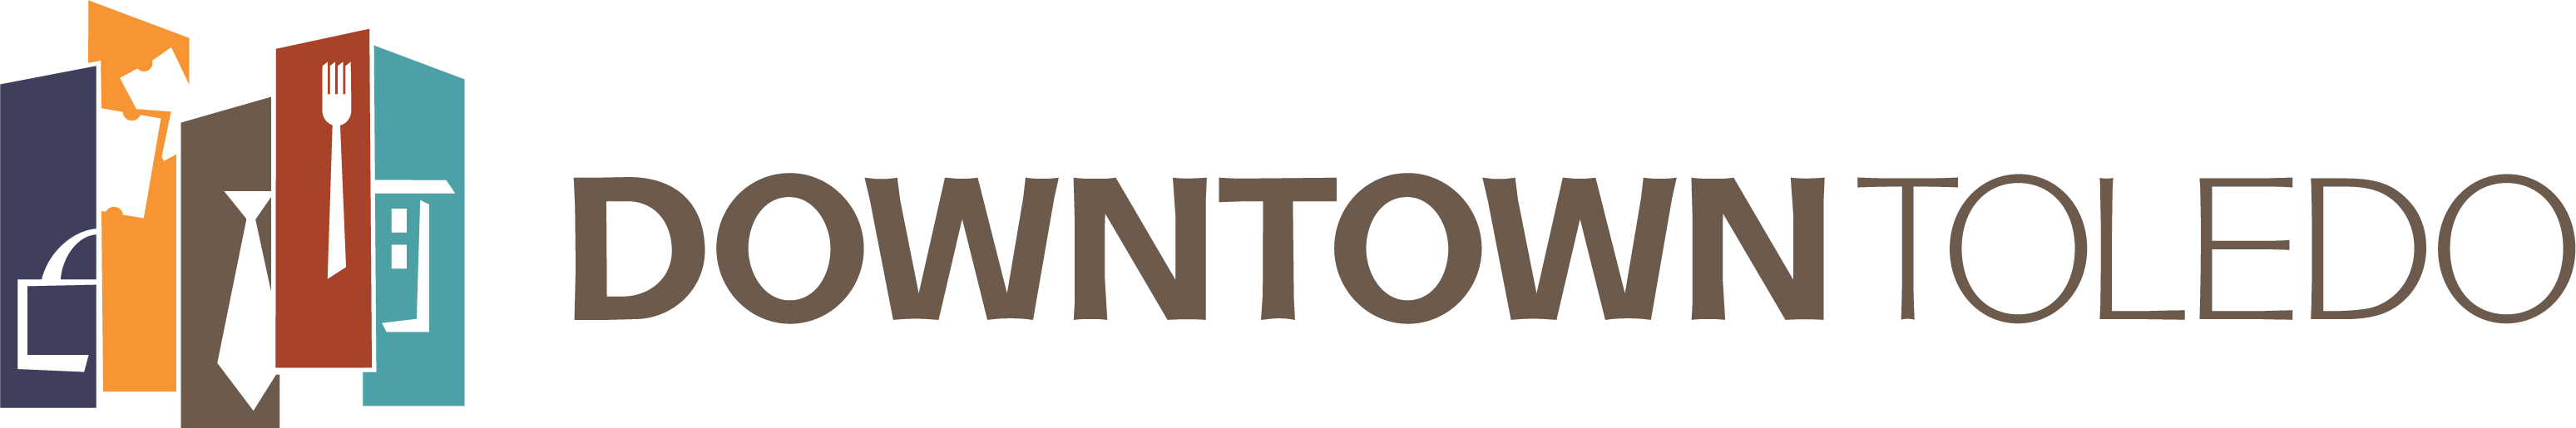 DownTown Toledo logo